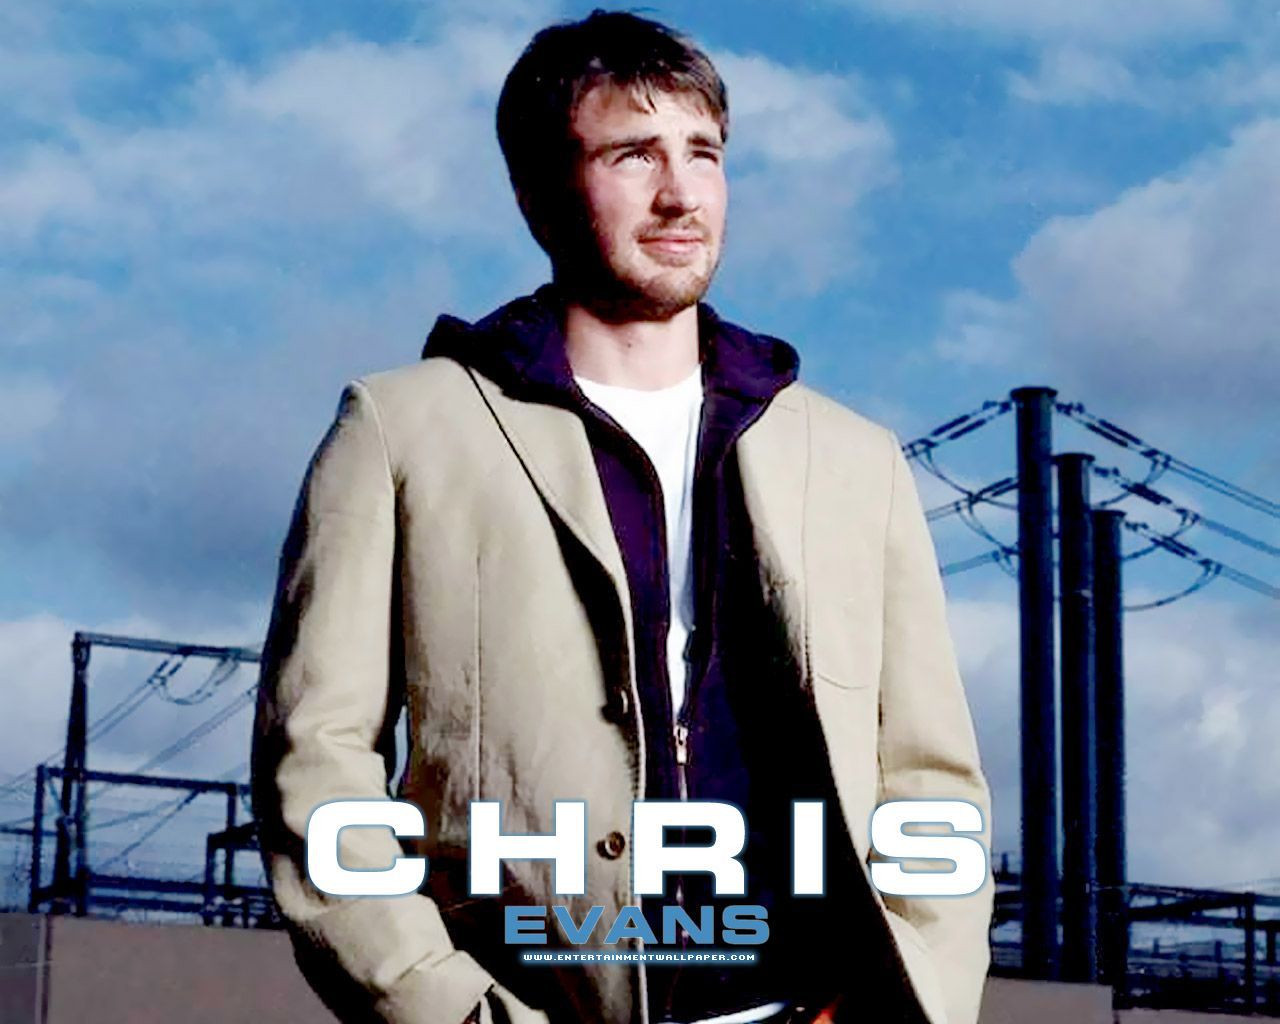 Chris Evans - Chris Evans Wallpaper 645400 - Fanpop